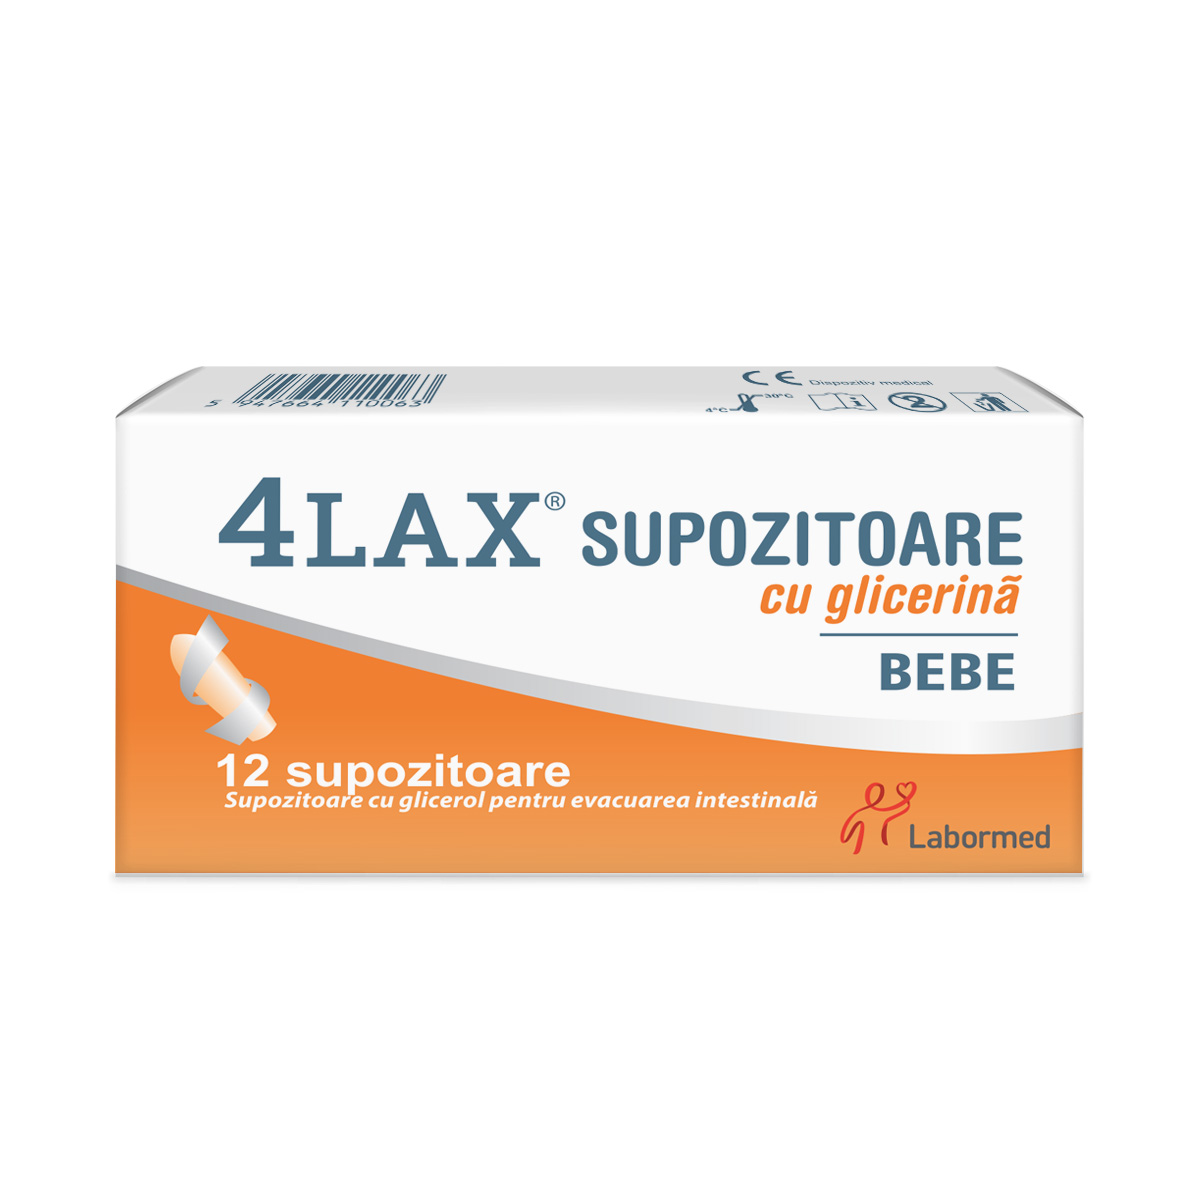 4Lax Supozitoare cu glicerina Bebe, 12 bucati, Labormed